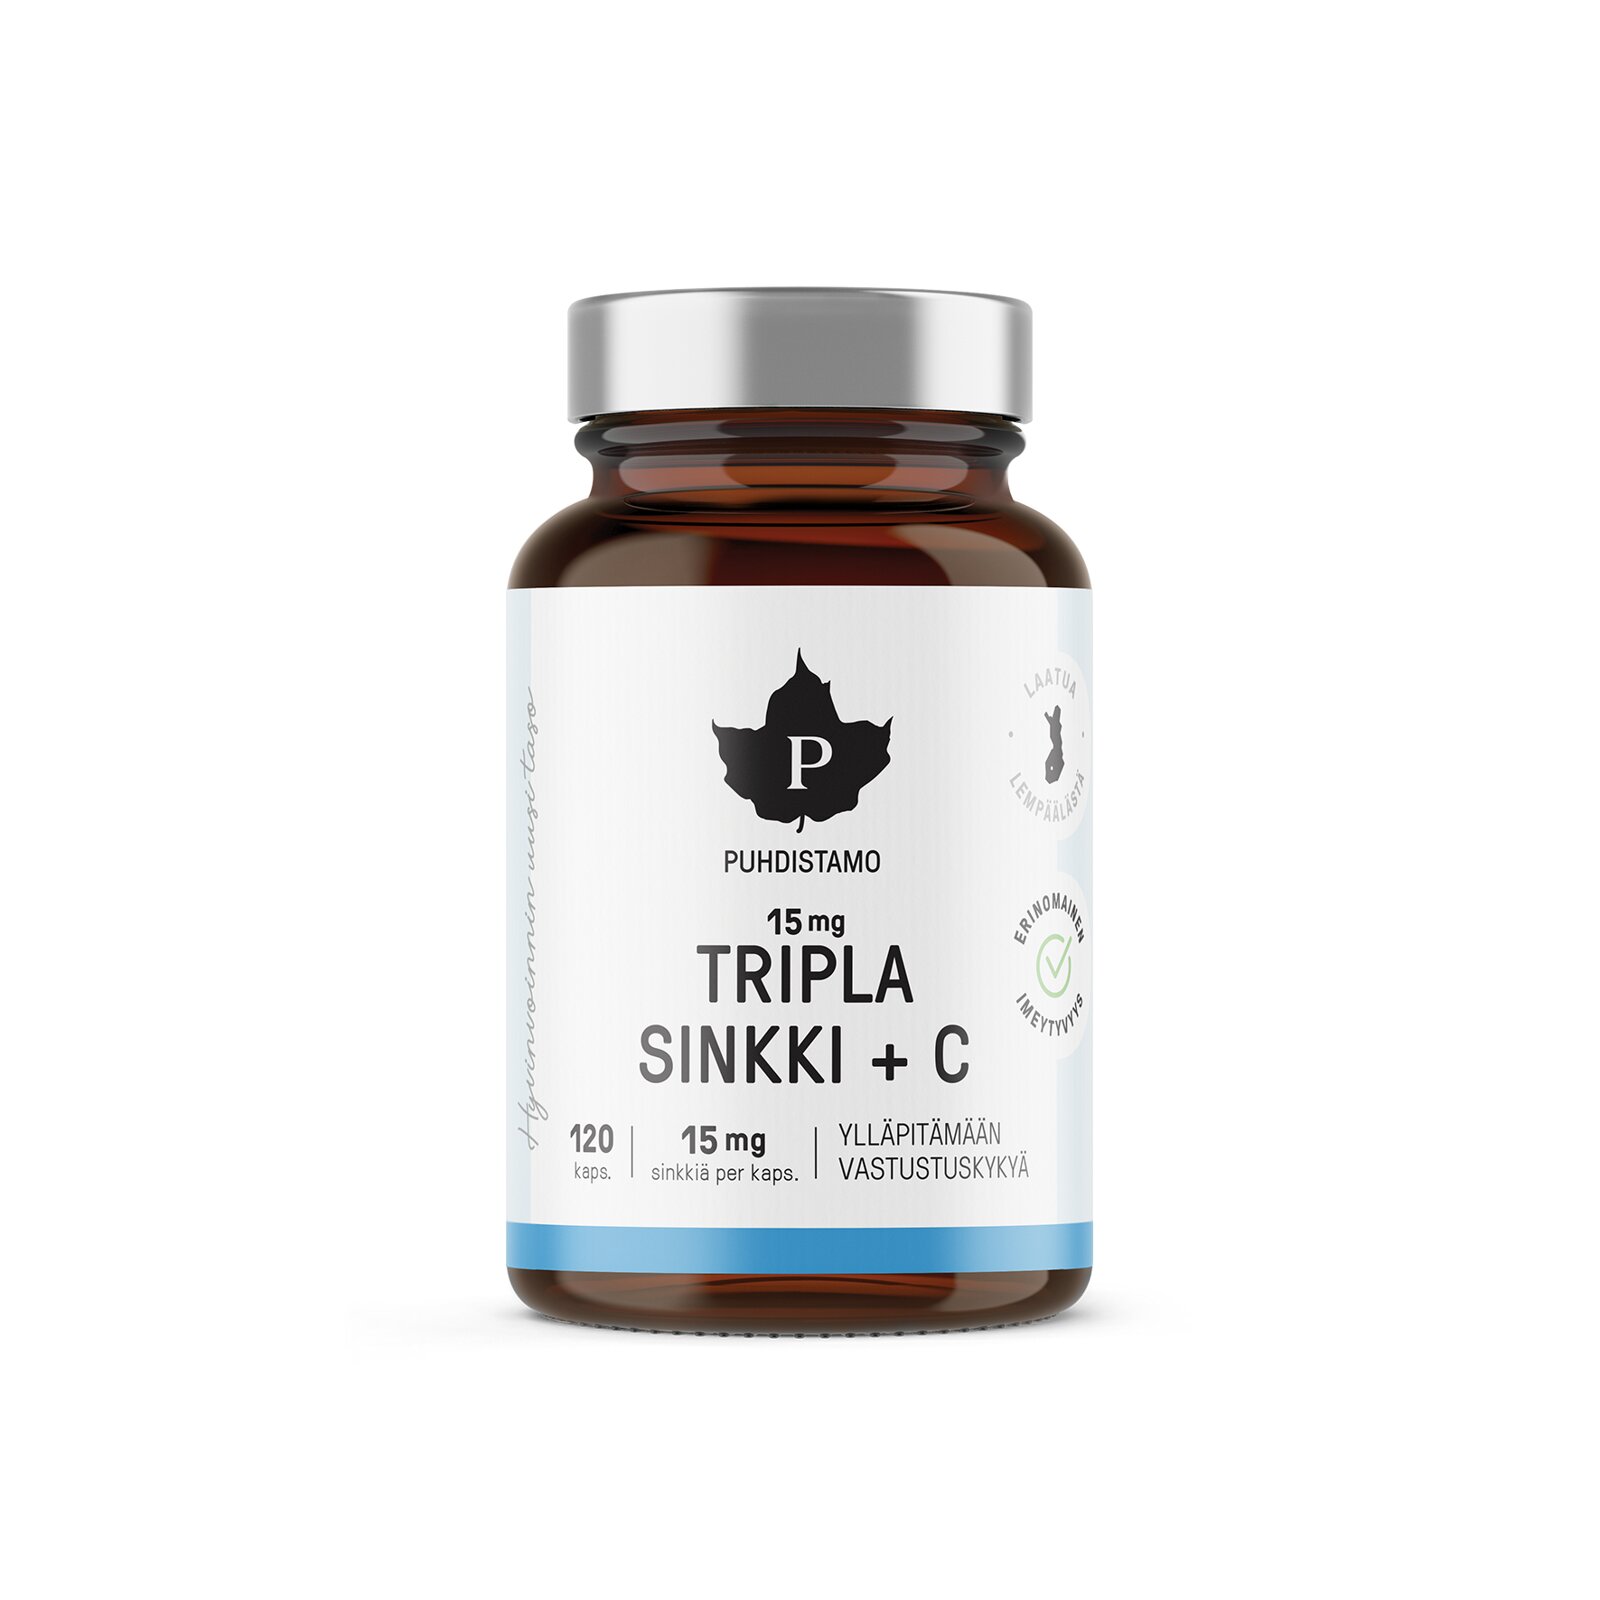 Puhdistamo Tripla Sinkki + C 15 mg, 120 kaps